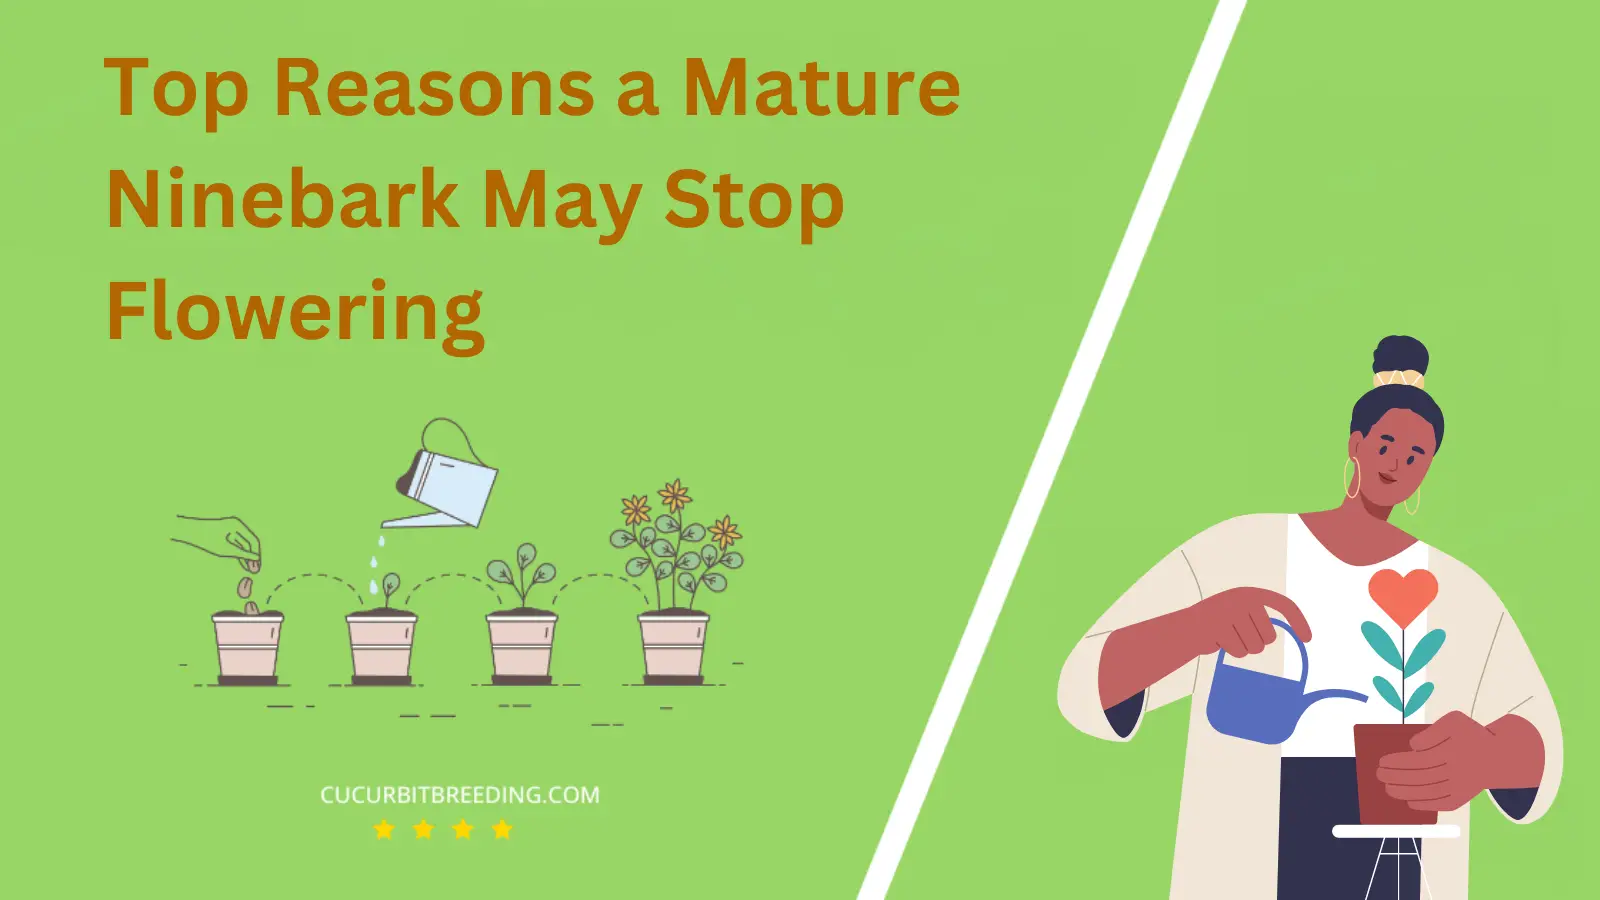 Top Reasons a Mature Ninebark May Stop Flowering